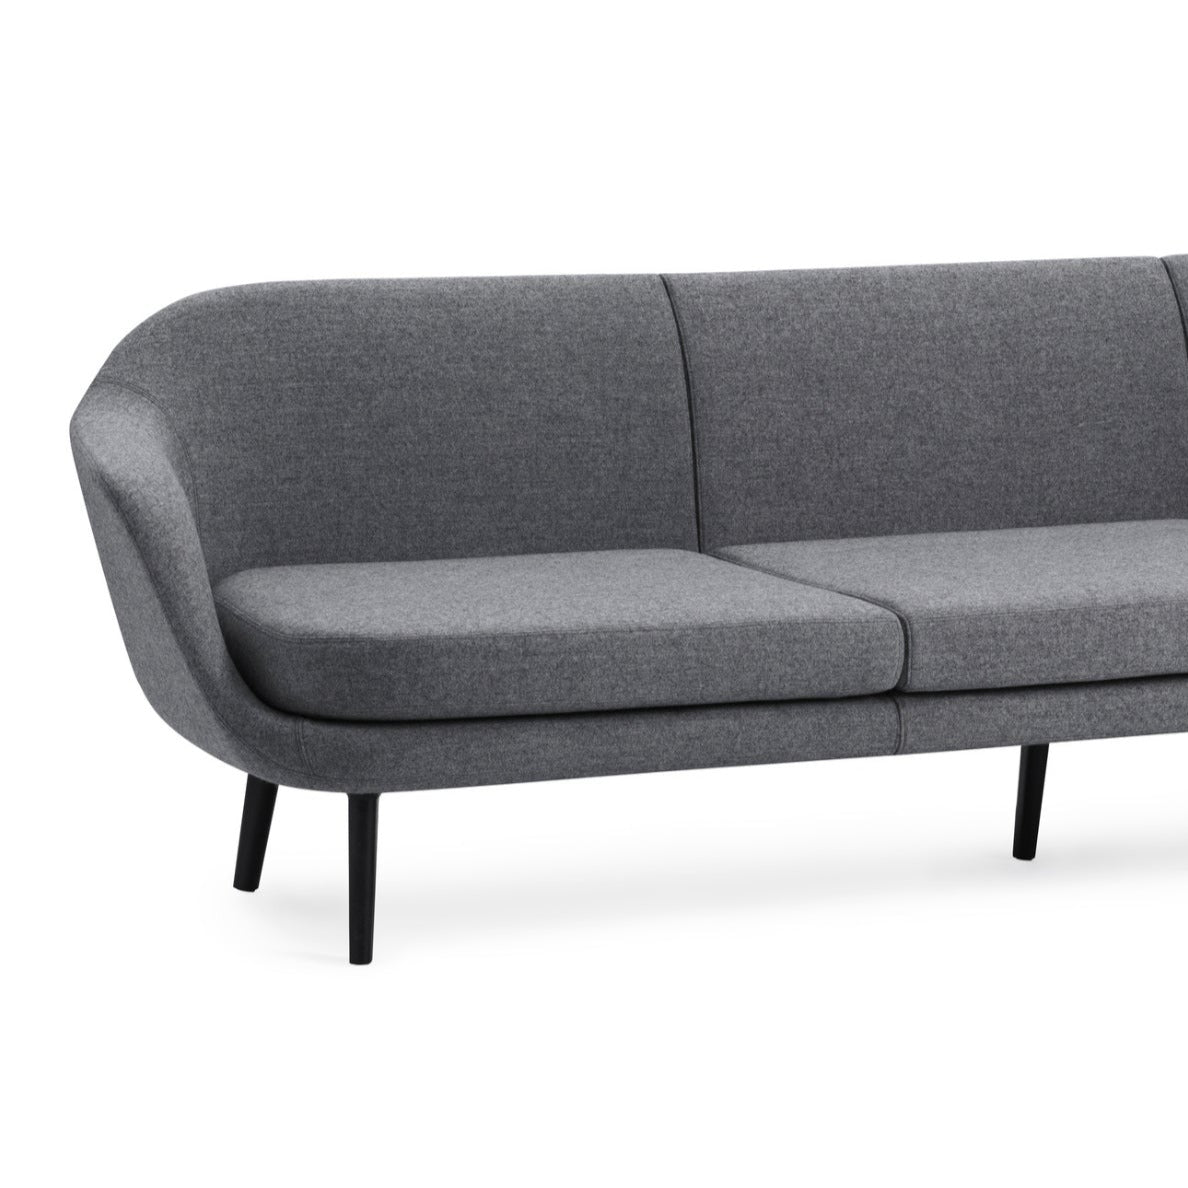 Normann Copenhagen Sum Modular 2 Seater Sofa. Made to order from someday designs. #colour_synergy-partner